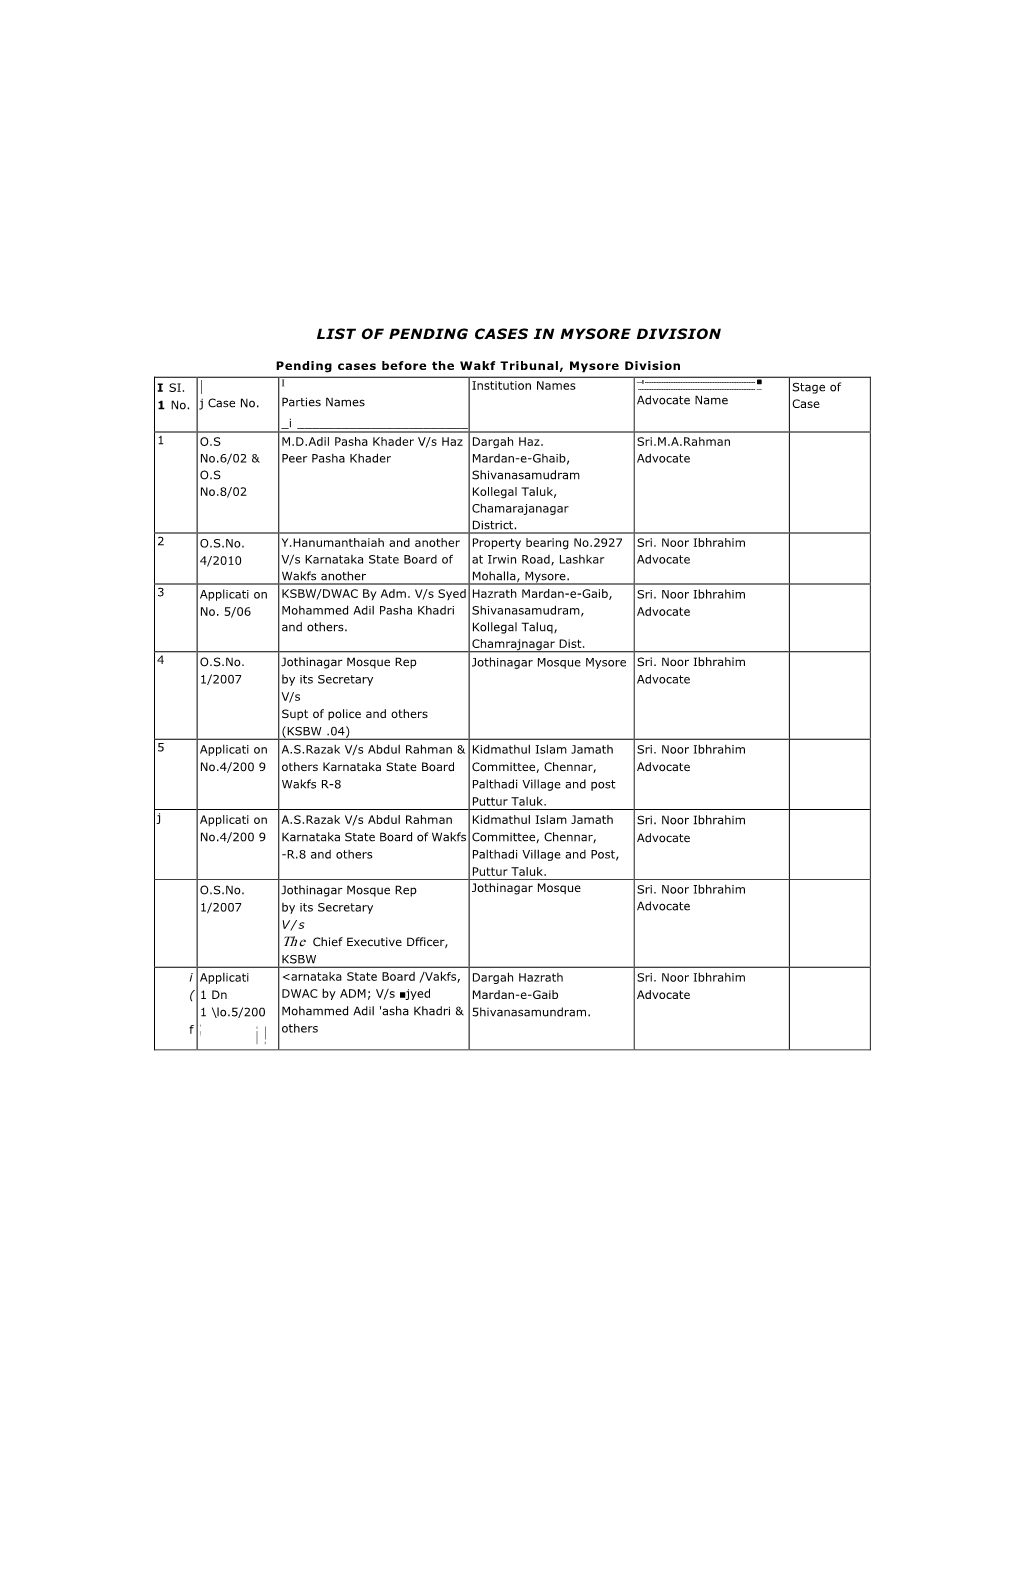 List of Pending Cases in Mysore Division